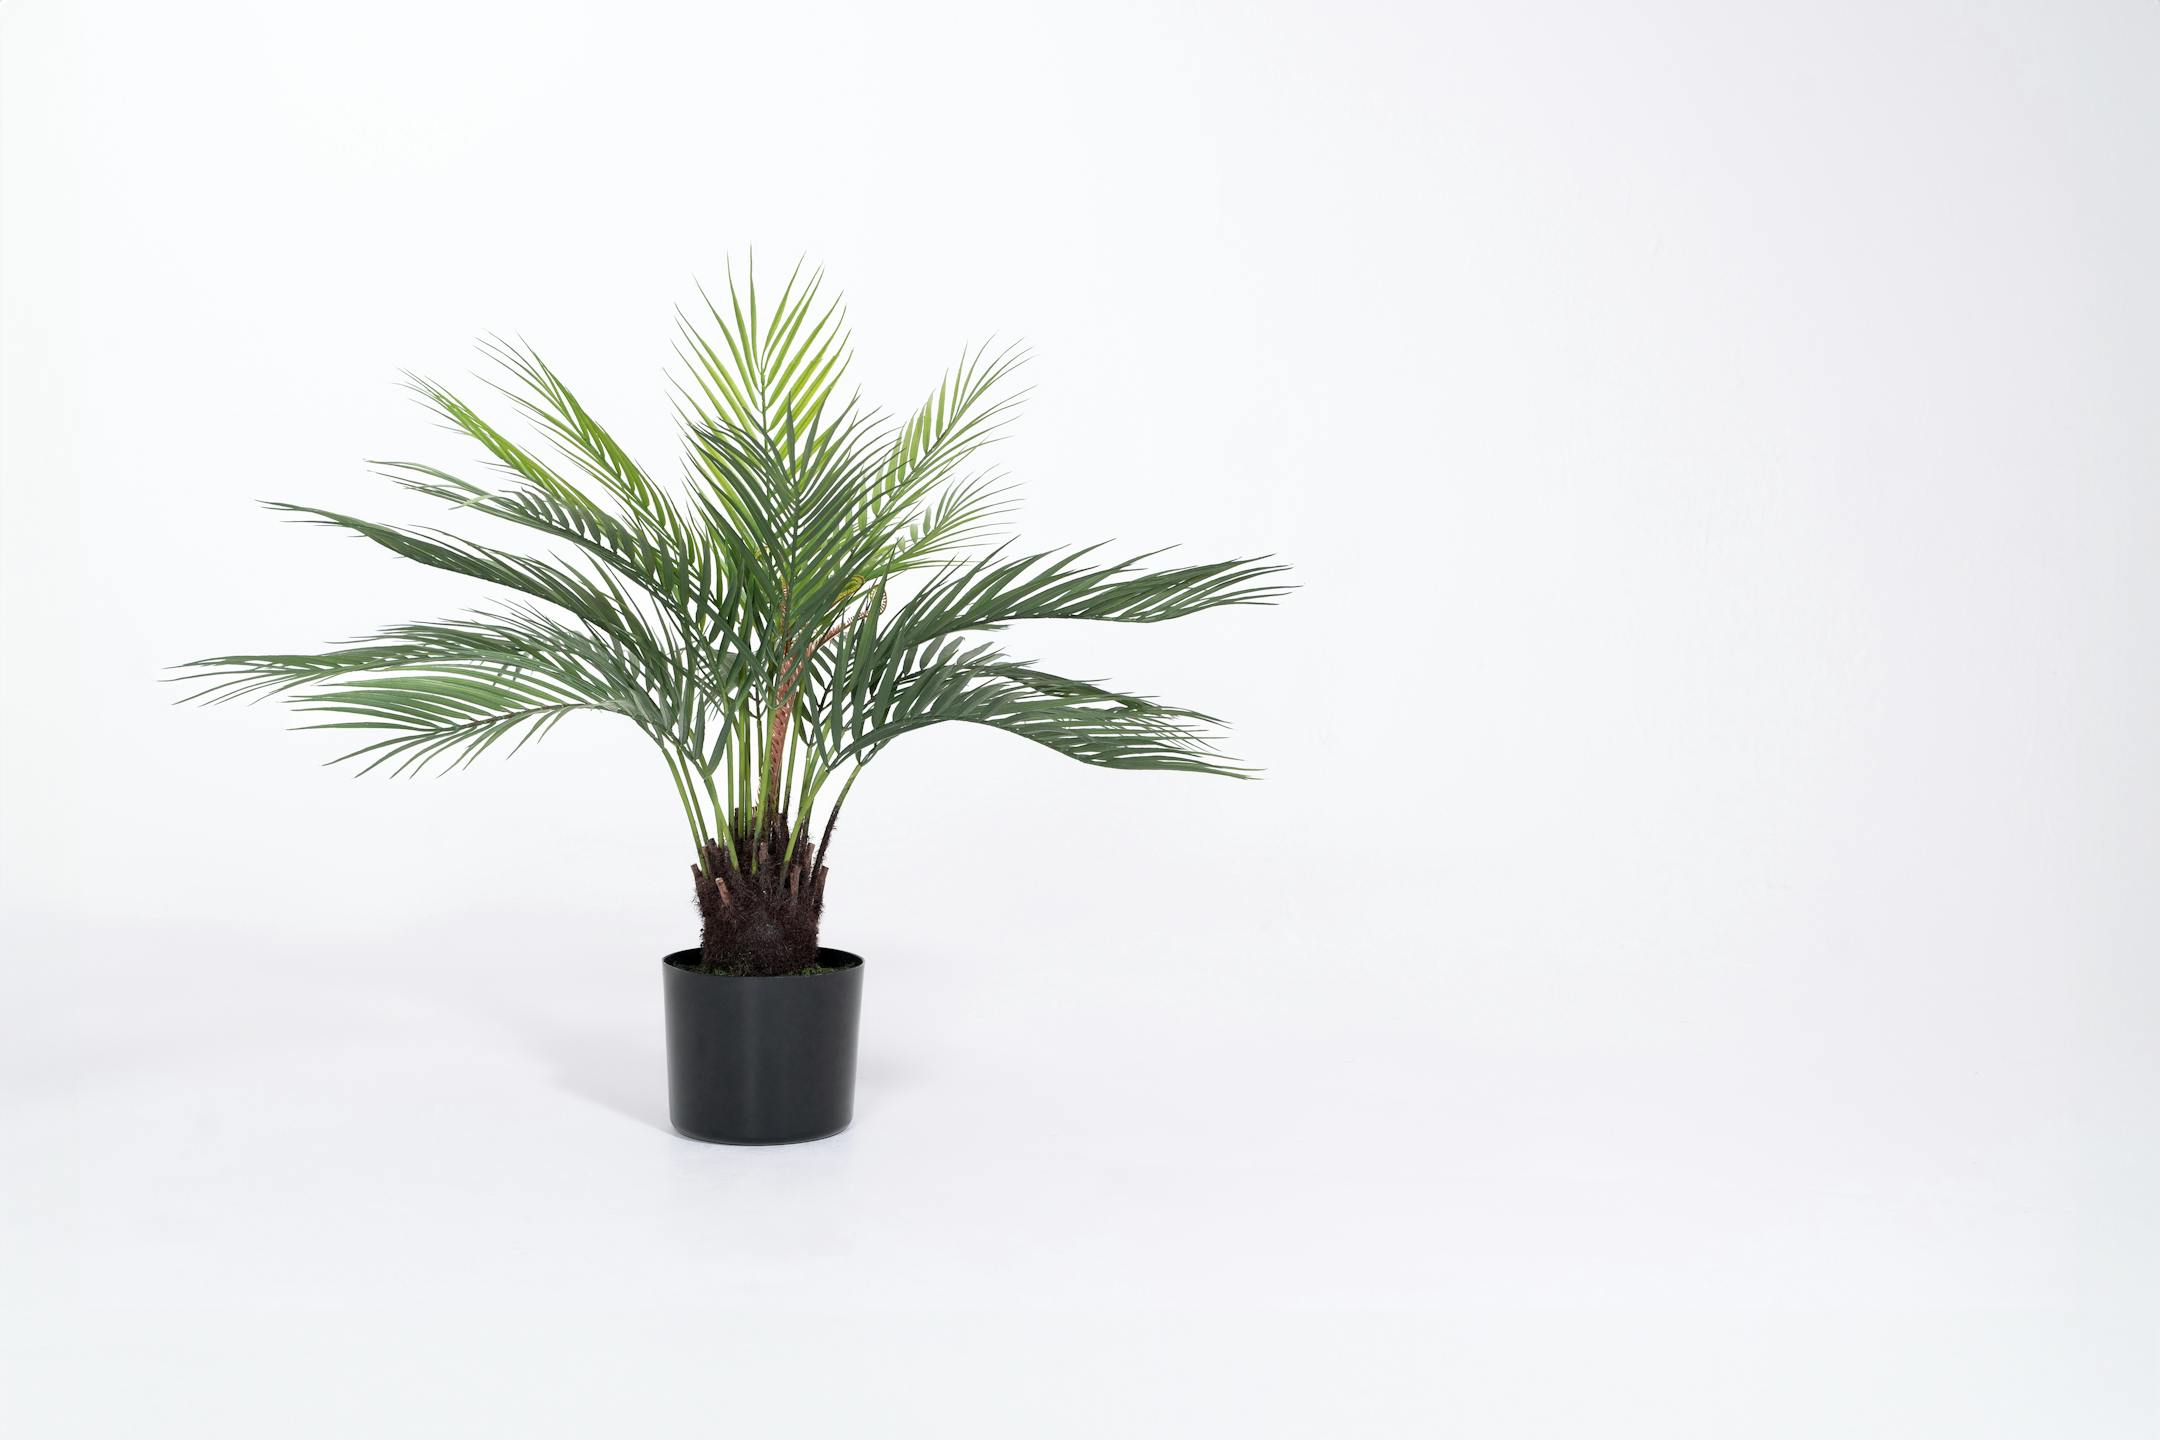 Artificial dicksonia dwarf palm